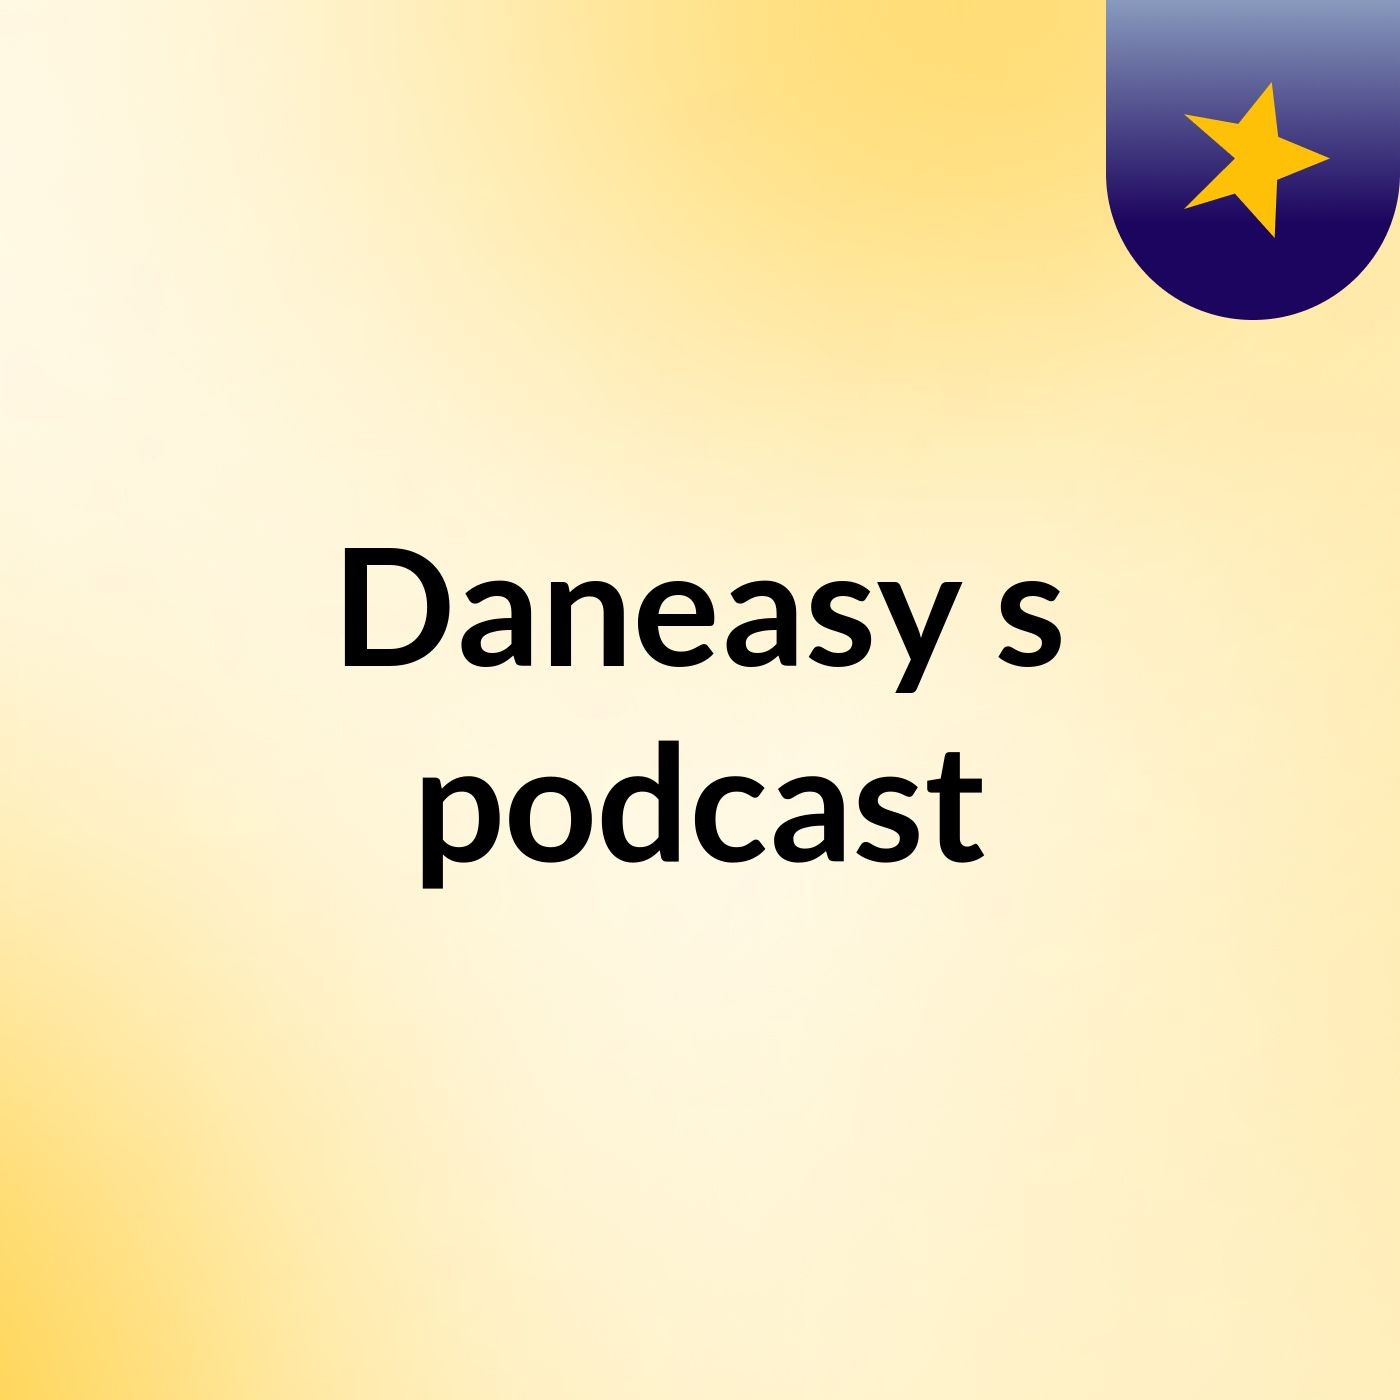 Daneasy's podcast